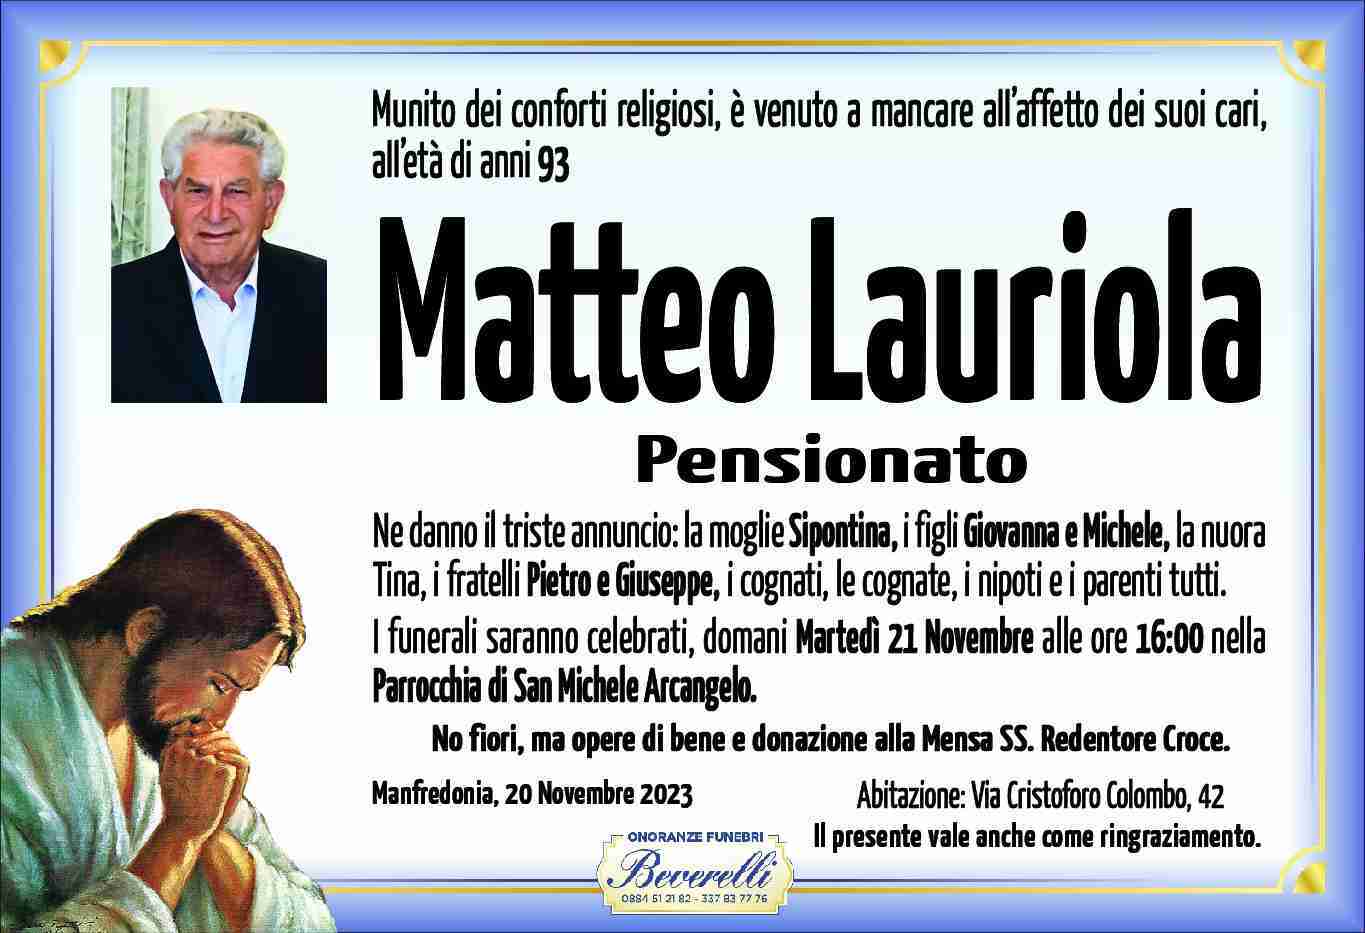 Matteo Lauriola